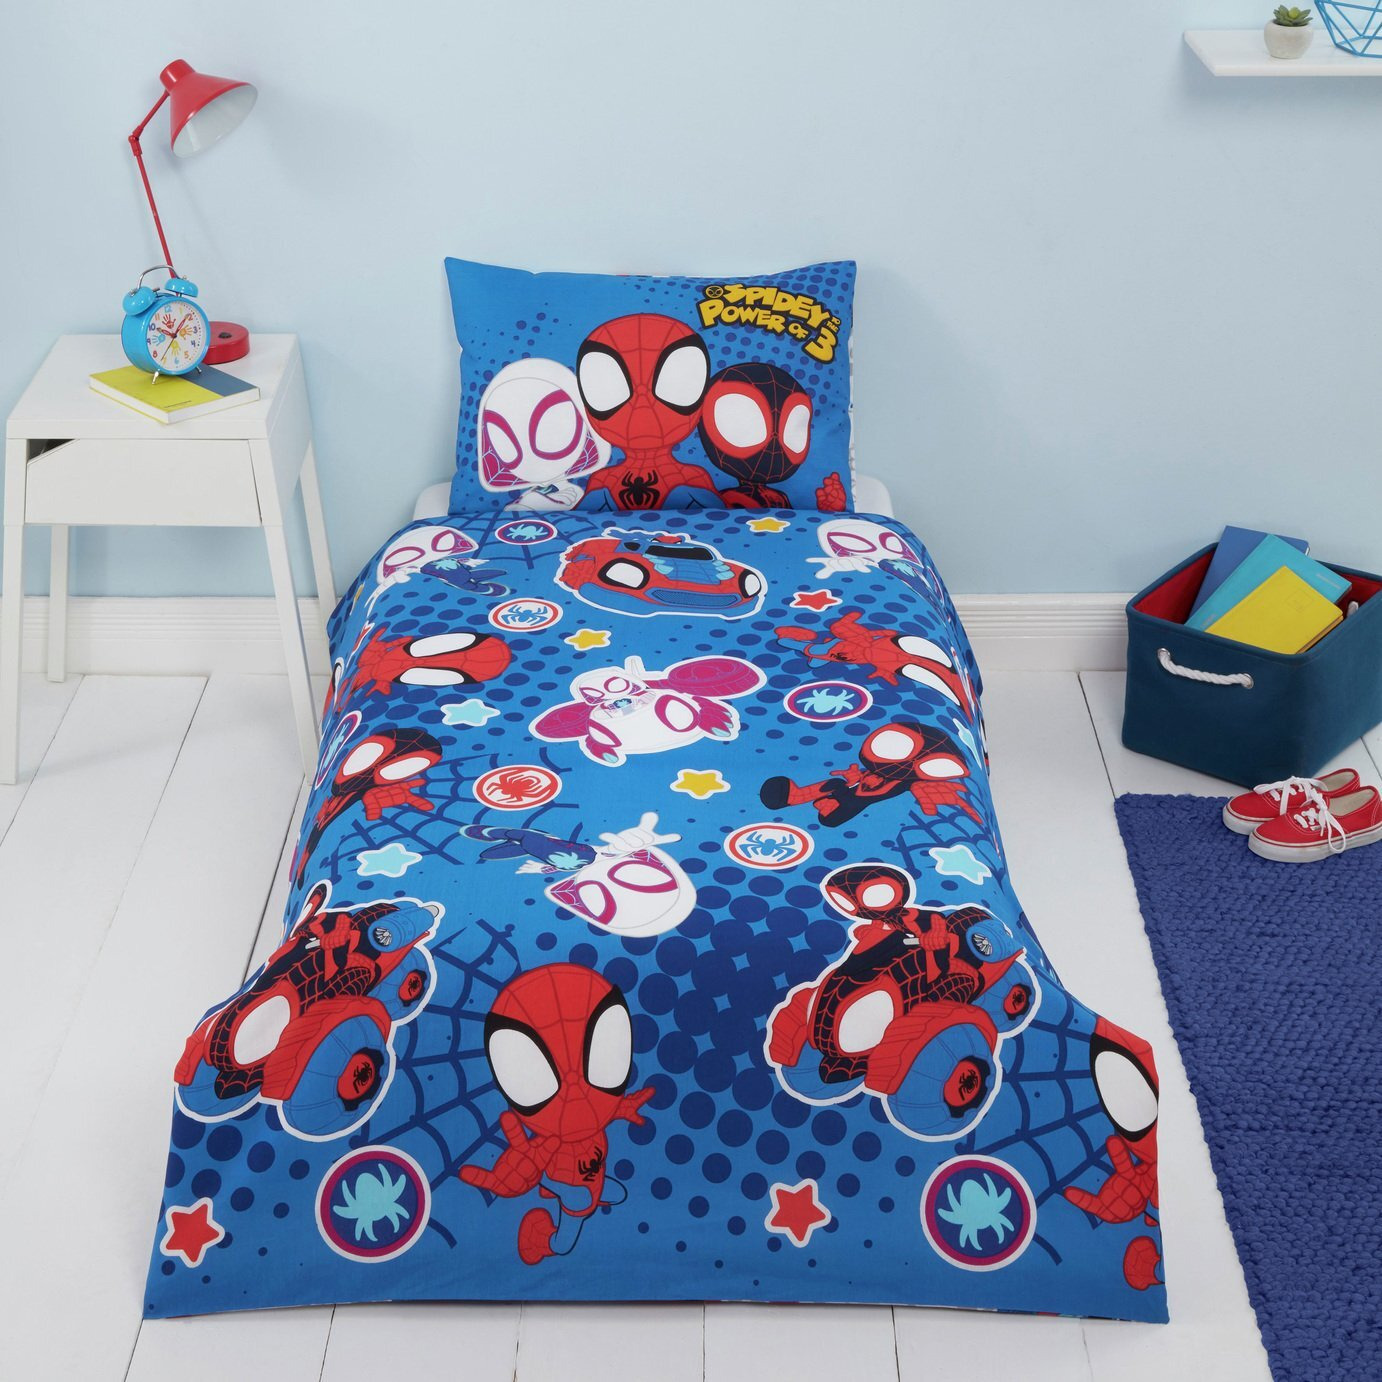 Disney Spidey and Friends Kids Bedding Set - Toddler - image 1